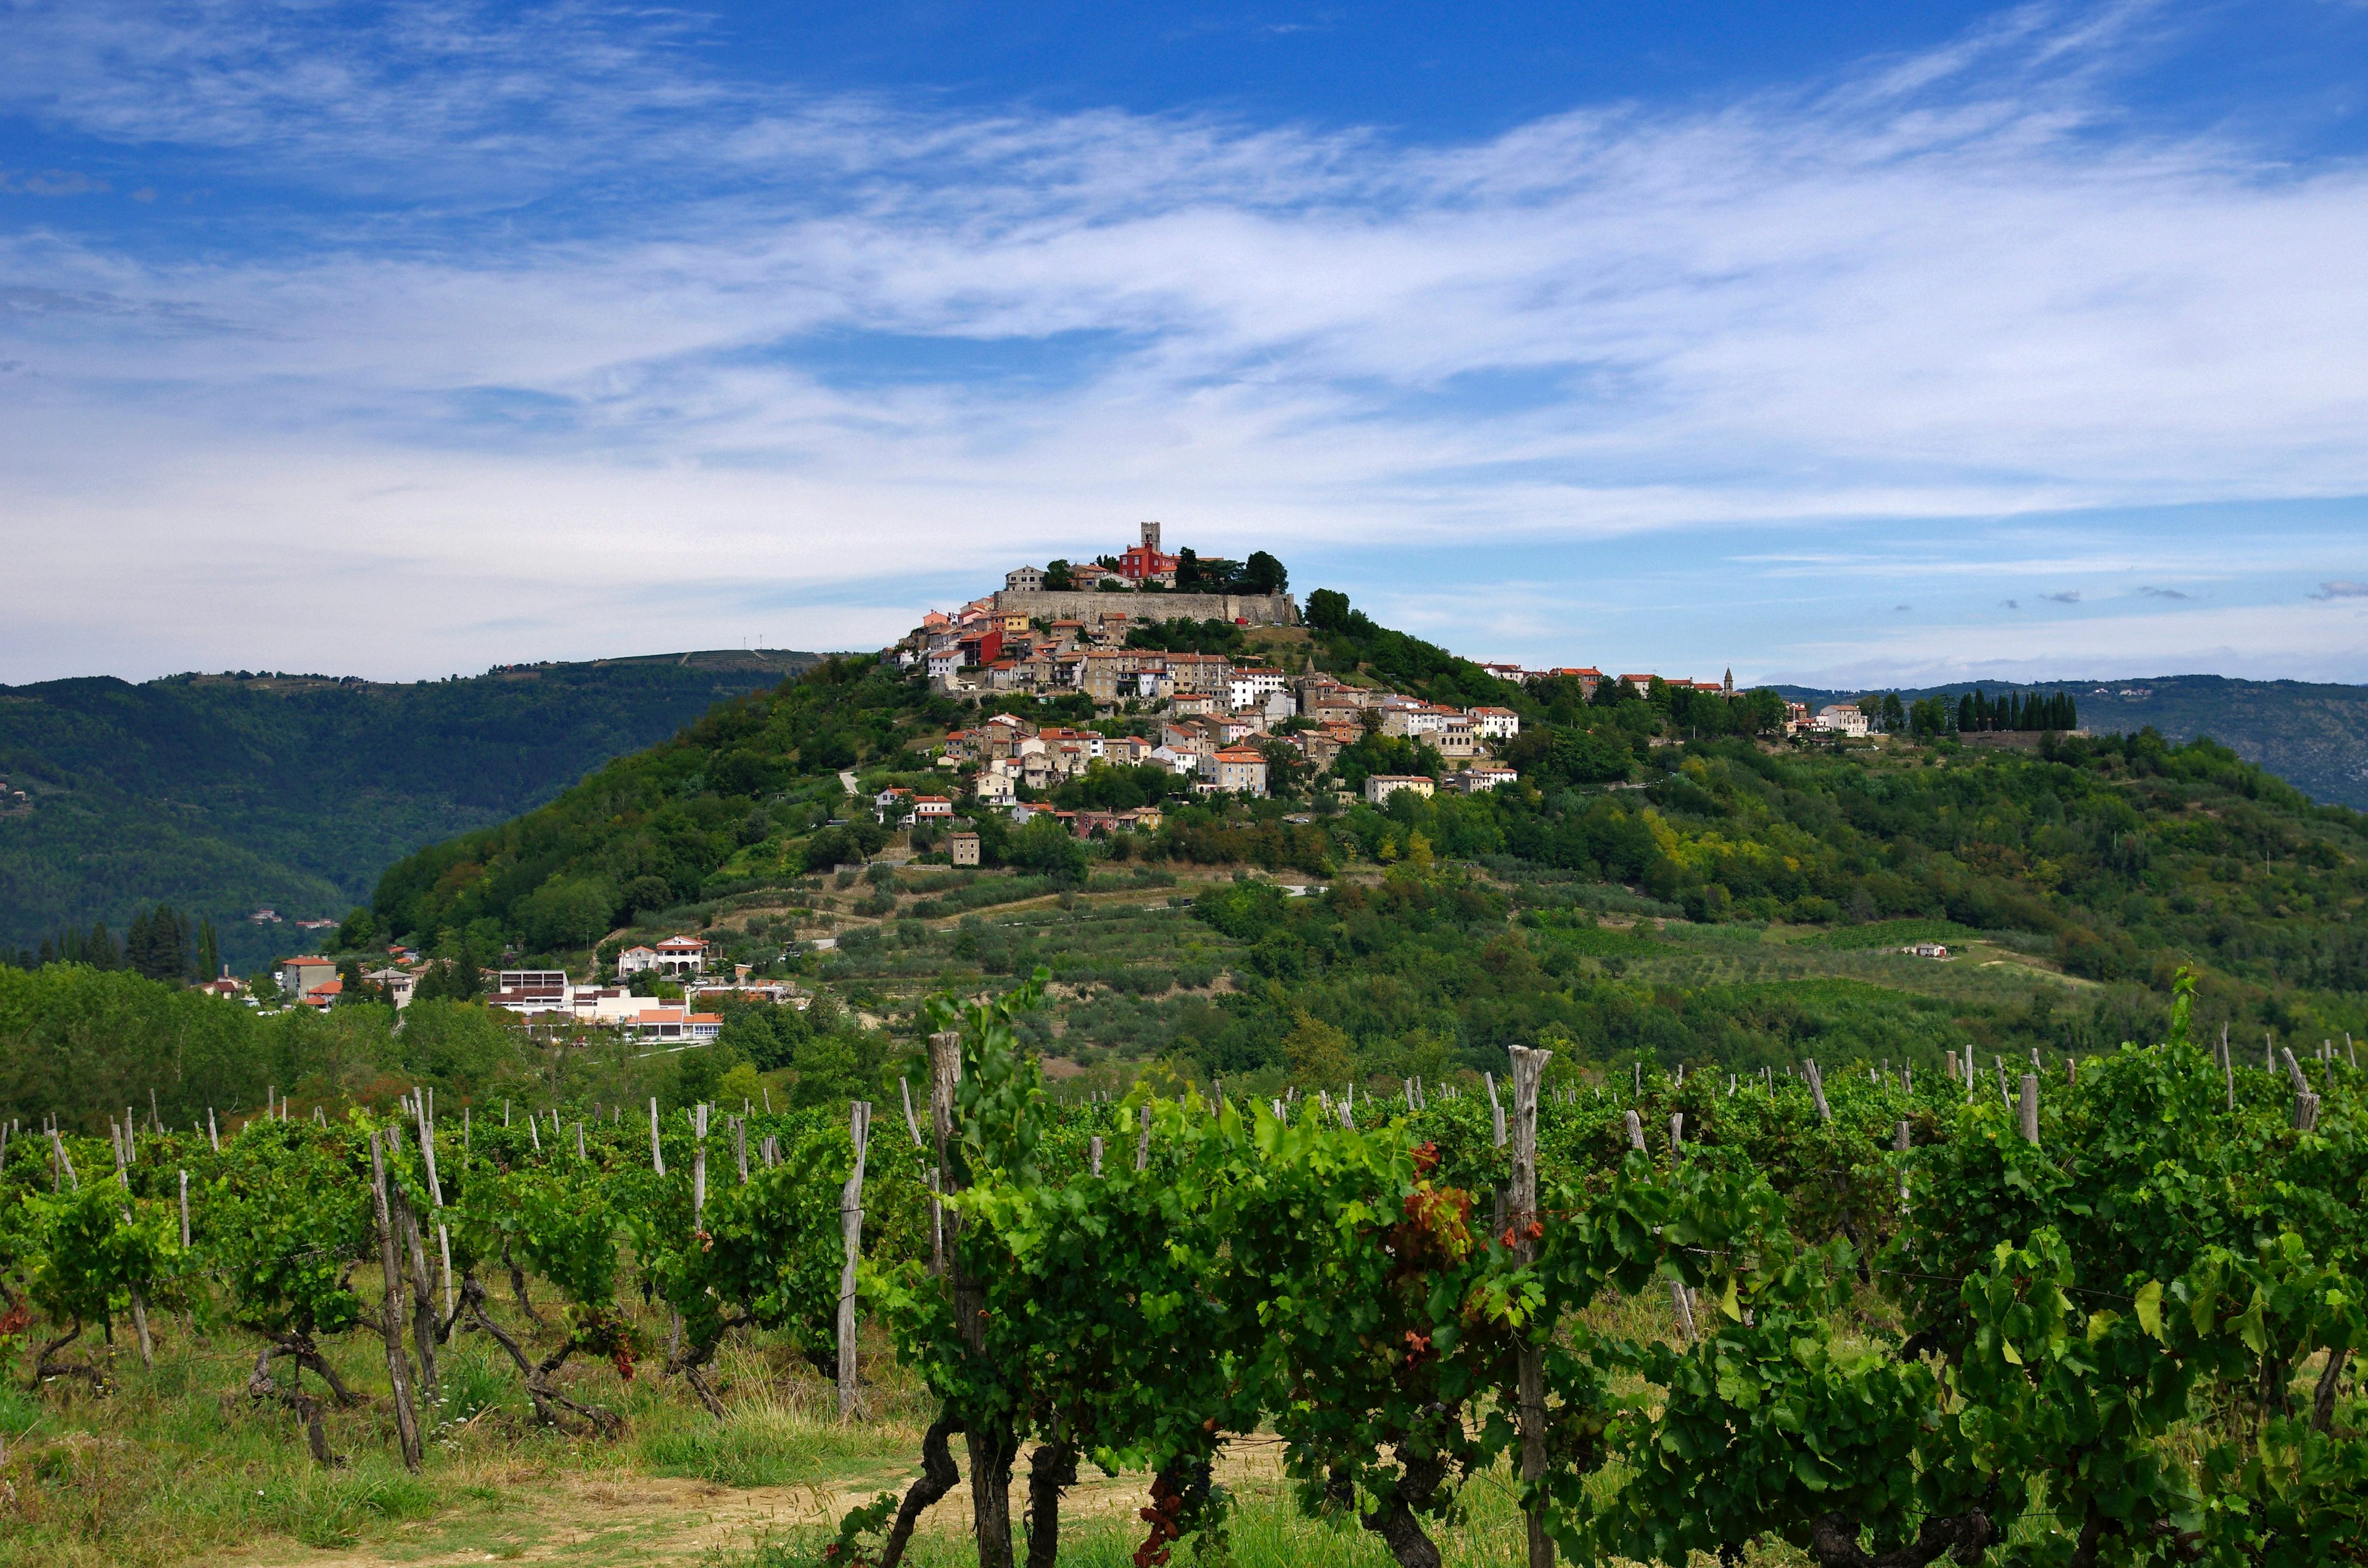 The hilltop village of Motovun